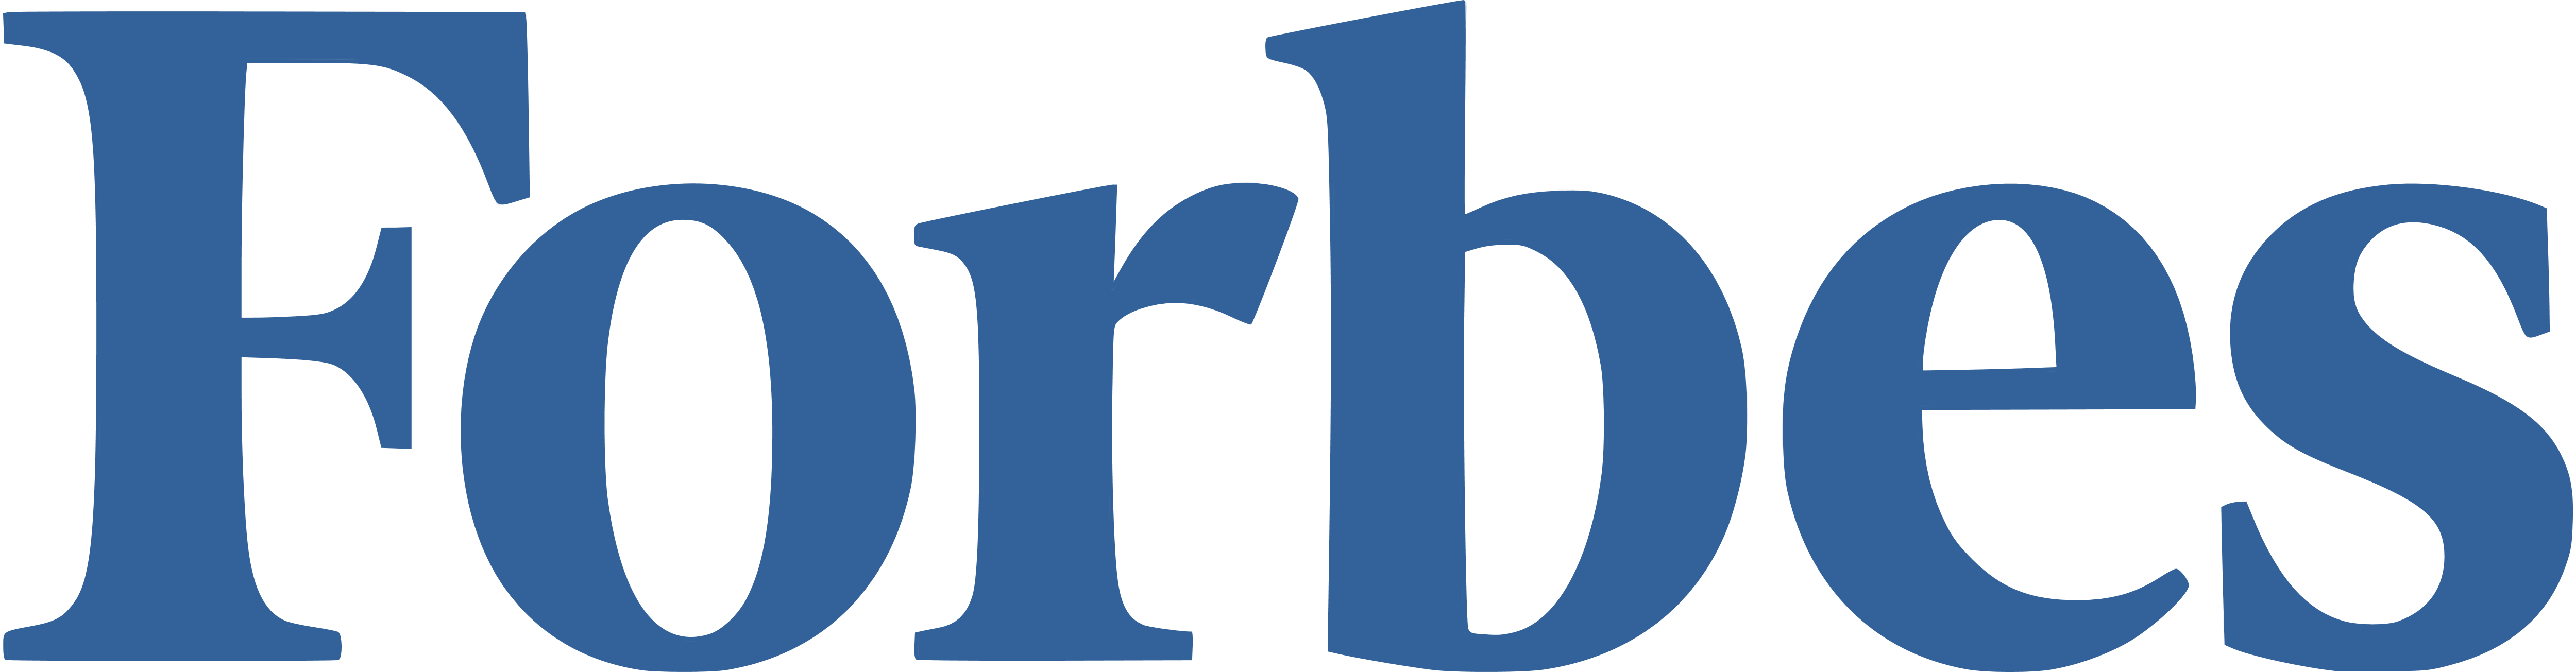 Forbes Logo Png Image | Trans